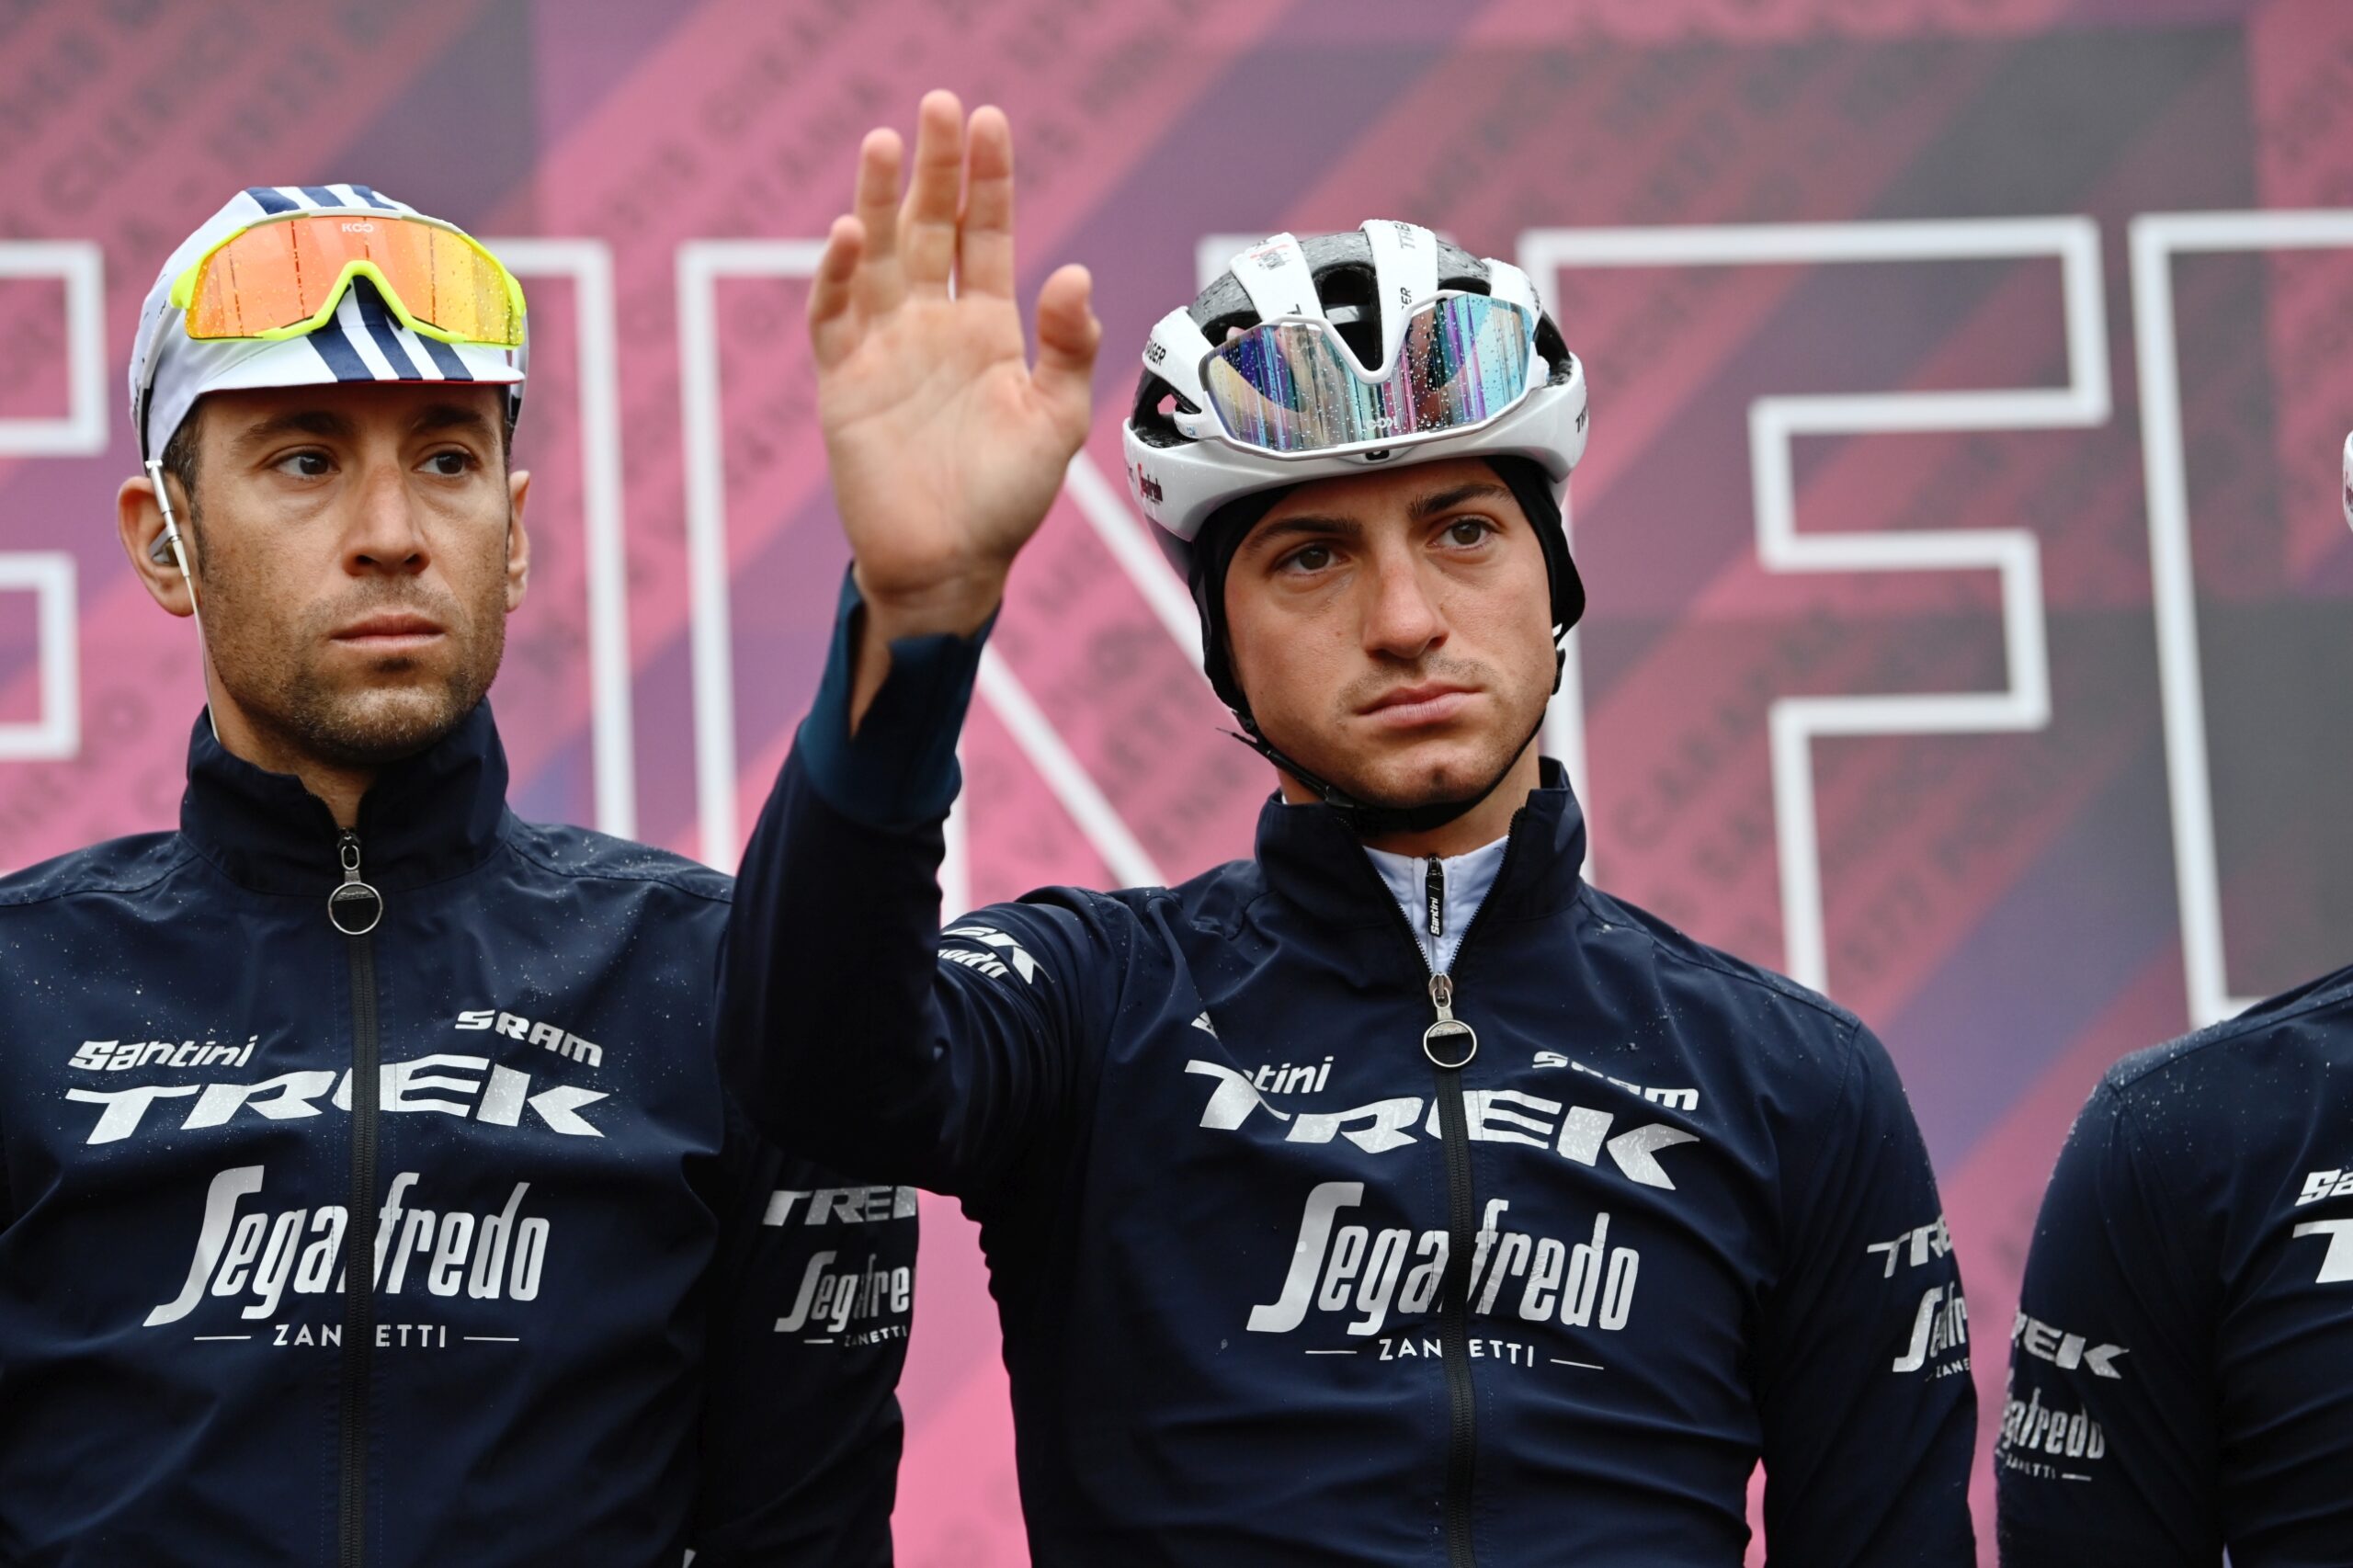 Vuelta a Espana 2021. Ciccone dostanie szansę od Trek-Segafredo